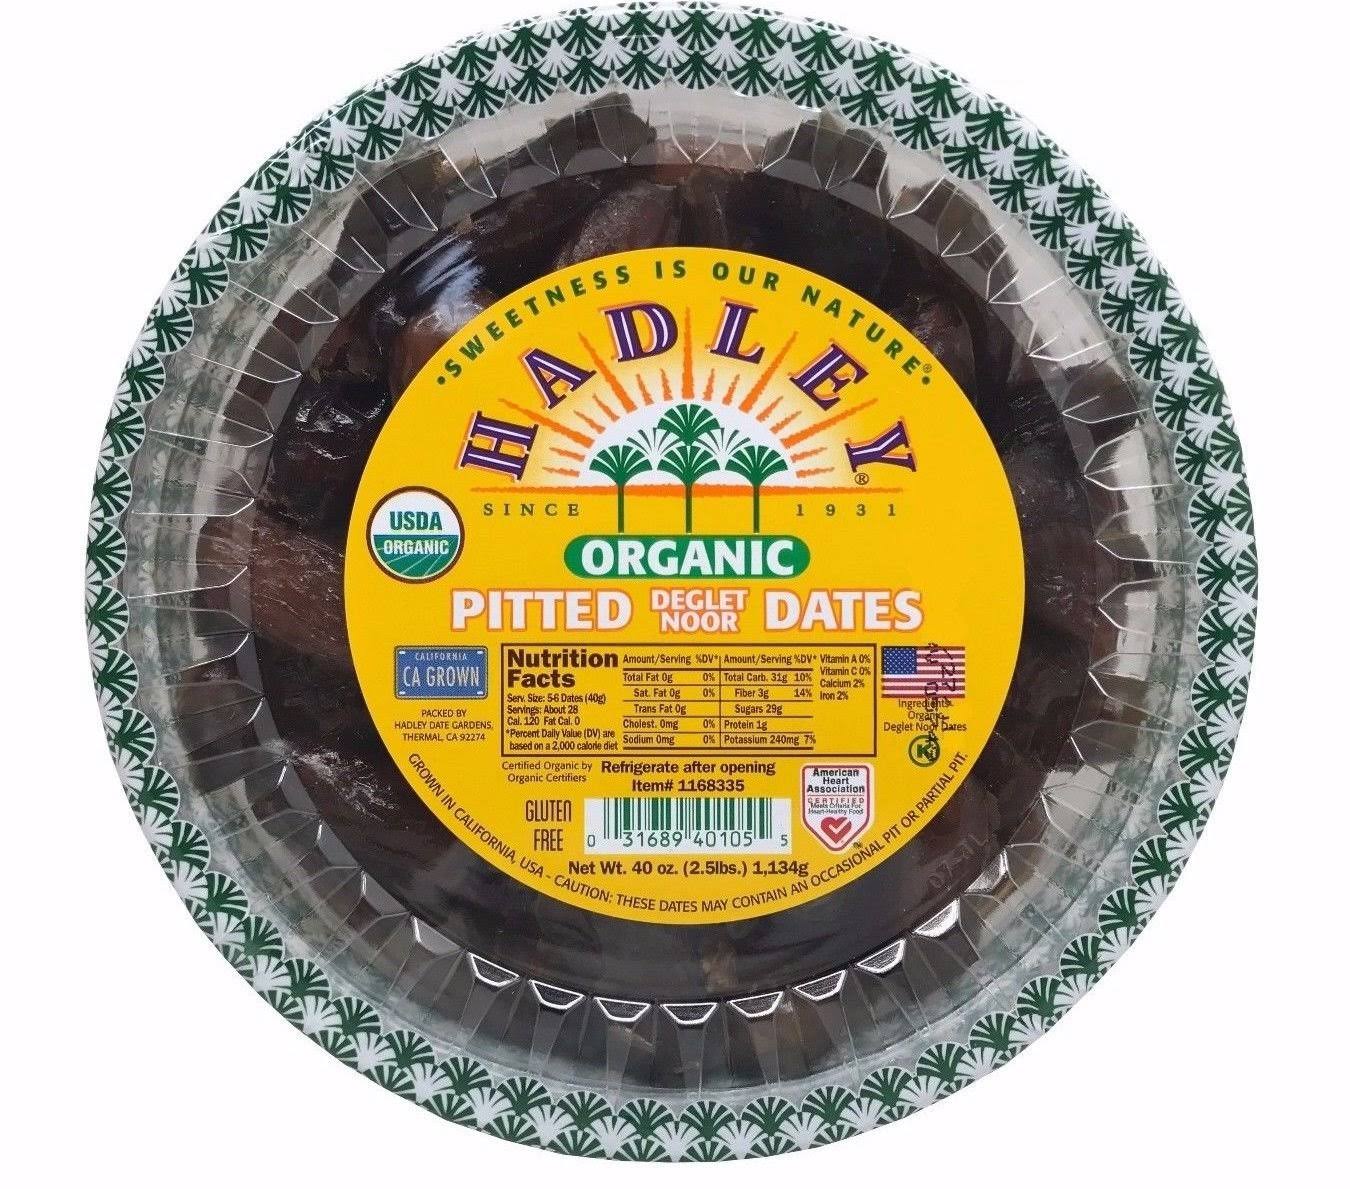 Hadley Organic Pitted Deglet Noor Dates - 40 oz